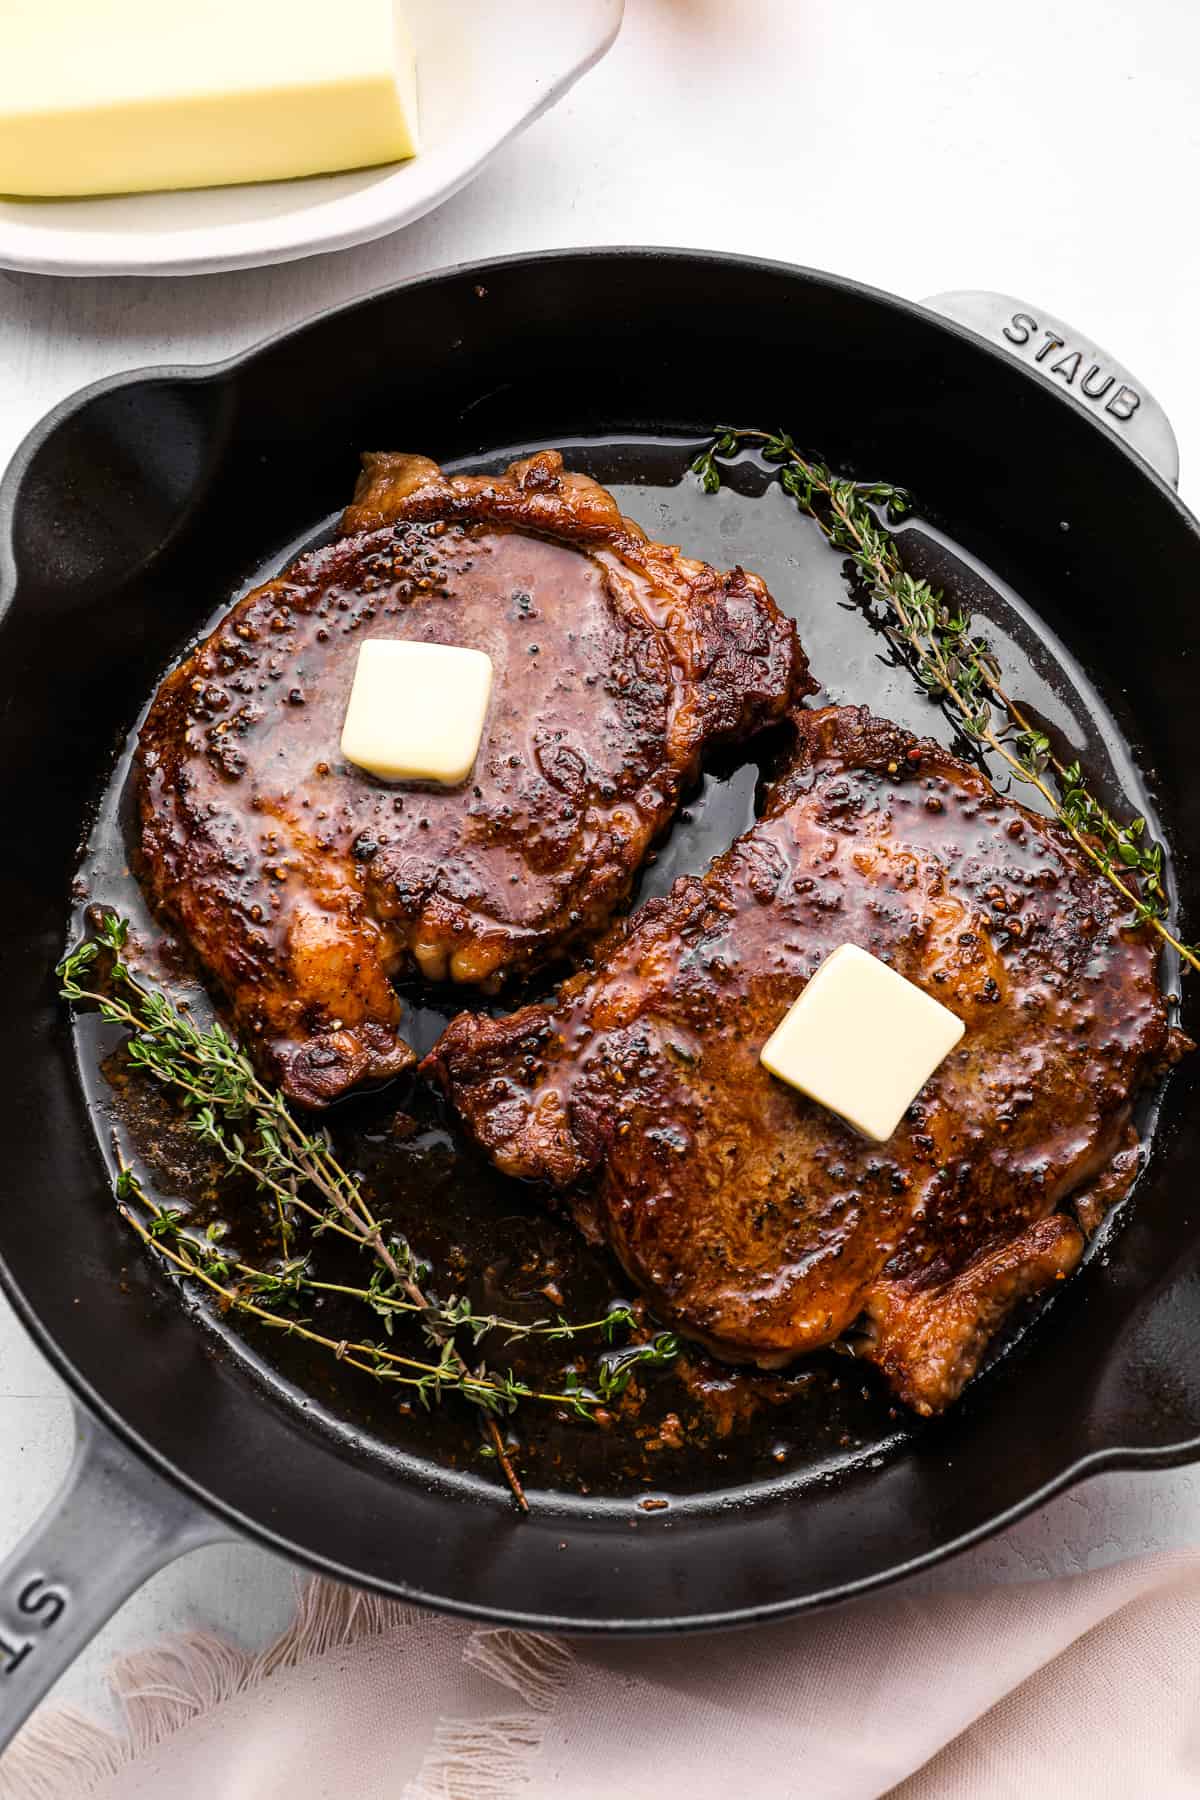 https://www.thecookierookie.com/wp-content/uploads/2022/12/oven-baked-steak-recipe-4.jpg